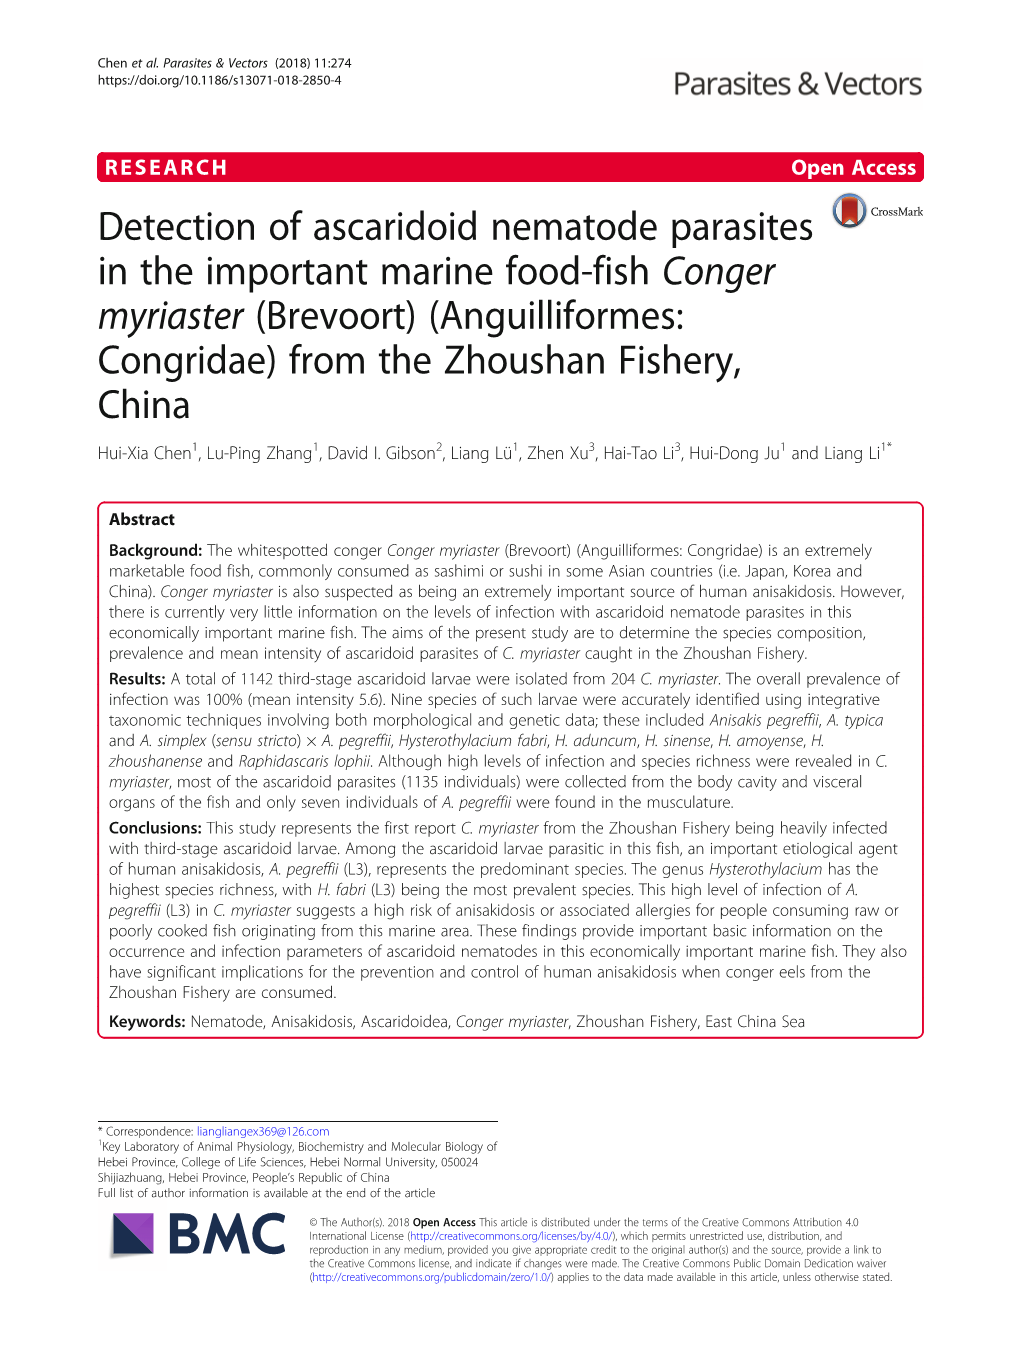 Detection of Ascaridoid Nematode Parasites in the Important Marine Food-Fish Conger Myriaster (Brevoort) (Anguilliformes: Congri